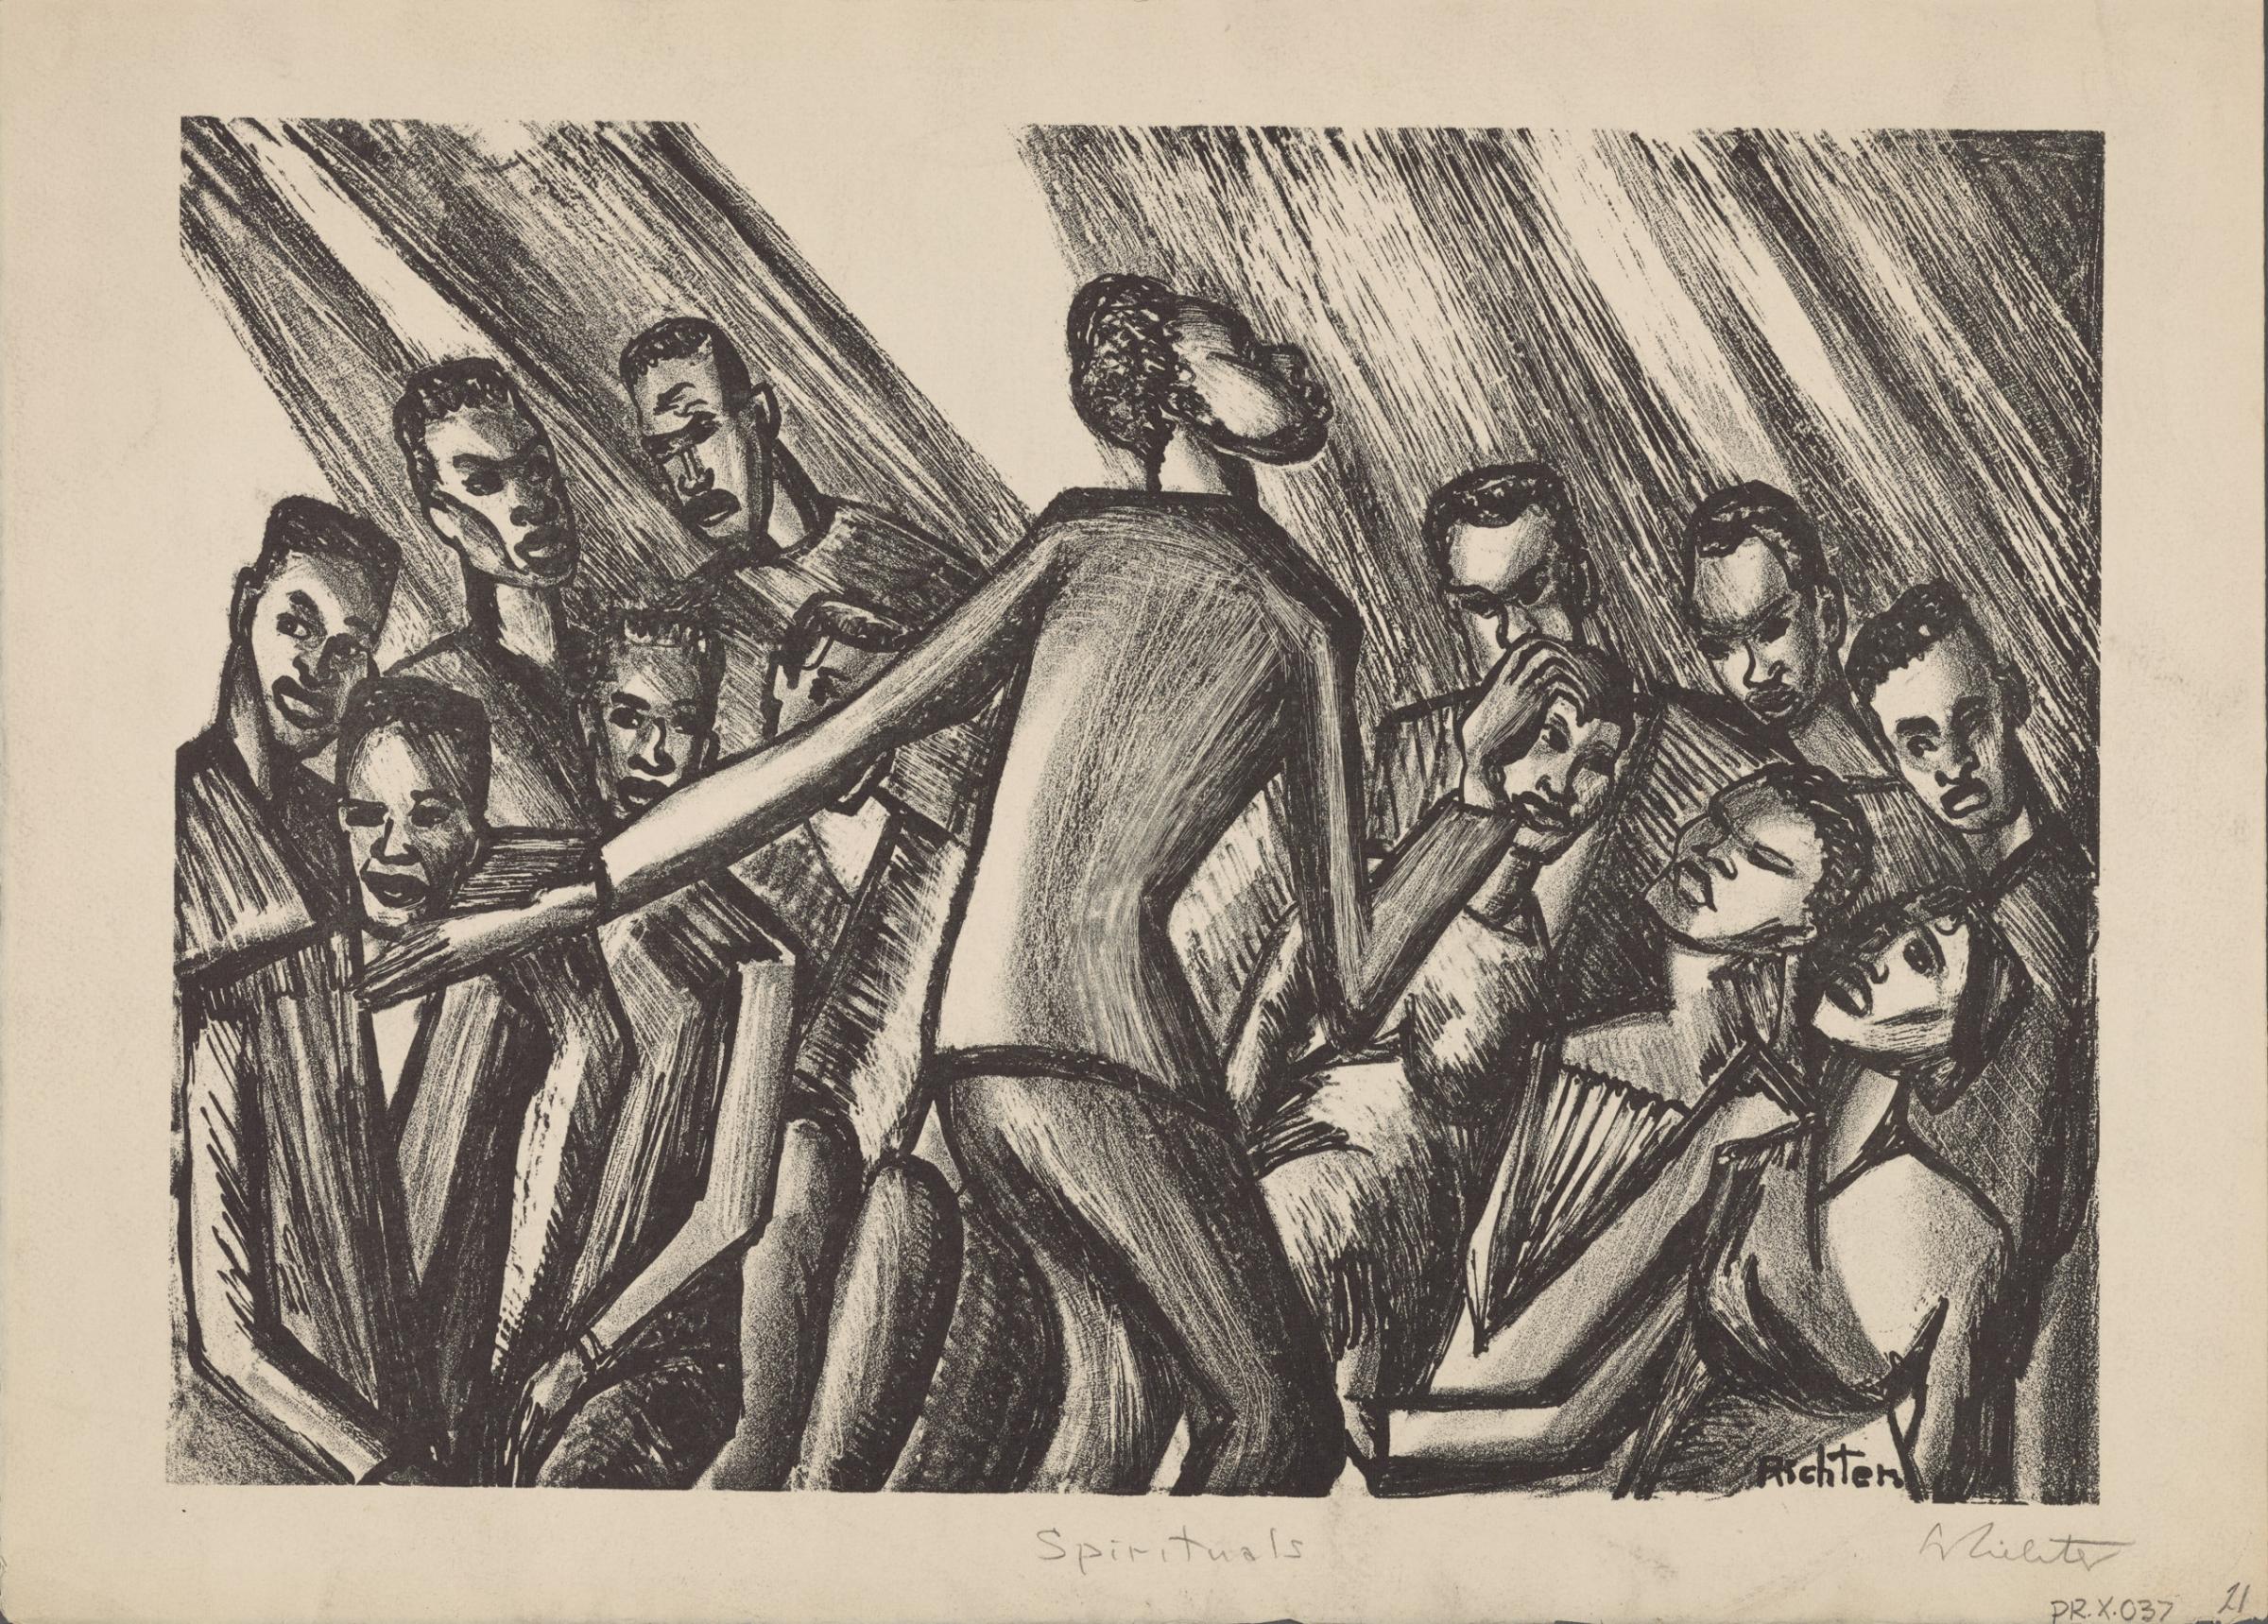 "Spirituals" by Lillian Richter from the Works Progress Administration (WPA) Art, circa 1935-1943.